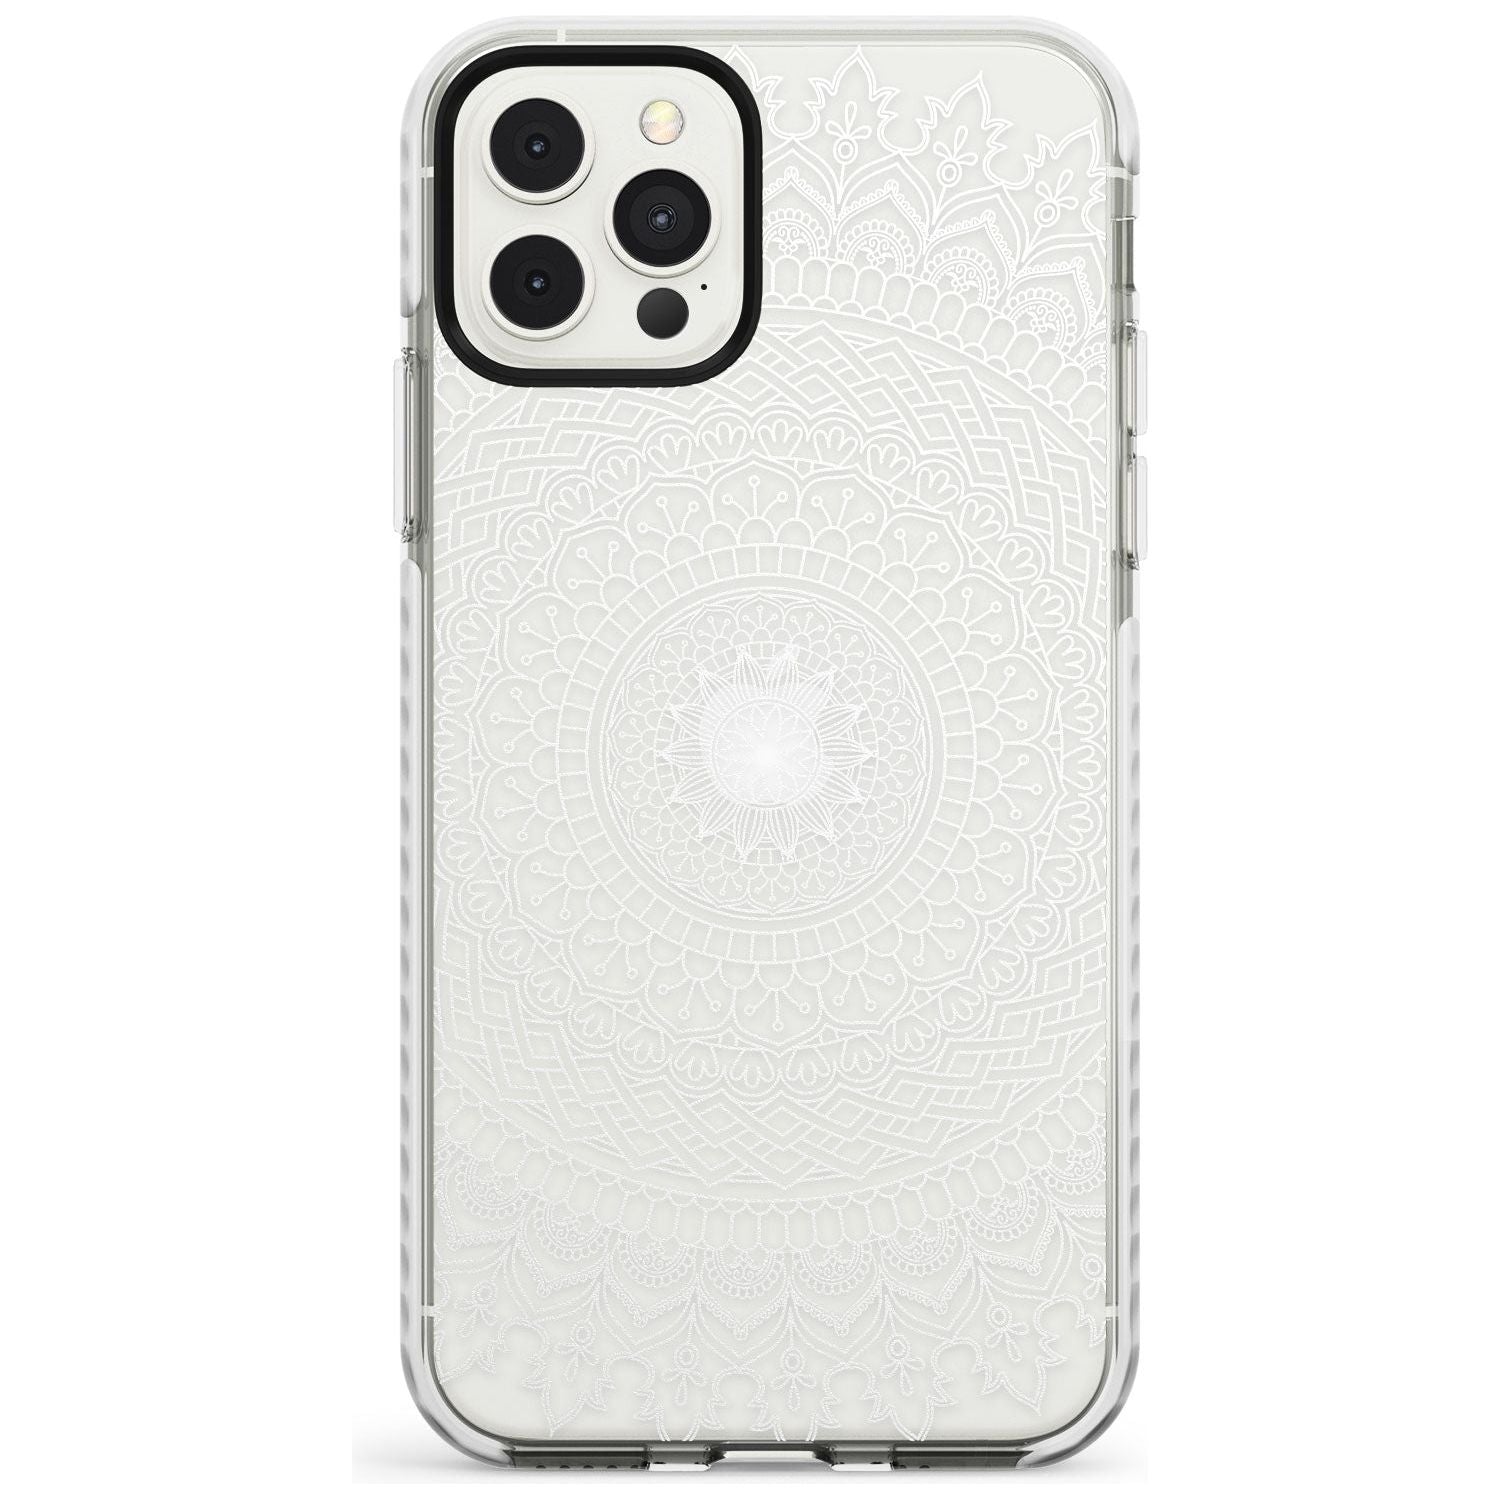 Large White Mandala Transparent Design Slim TPU Phone Case for iPhone 11 Pro Max